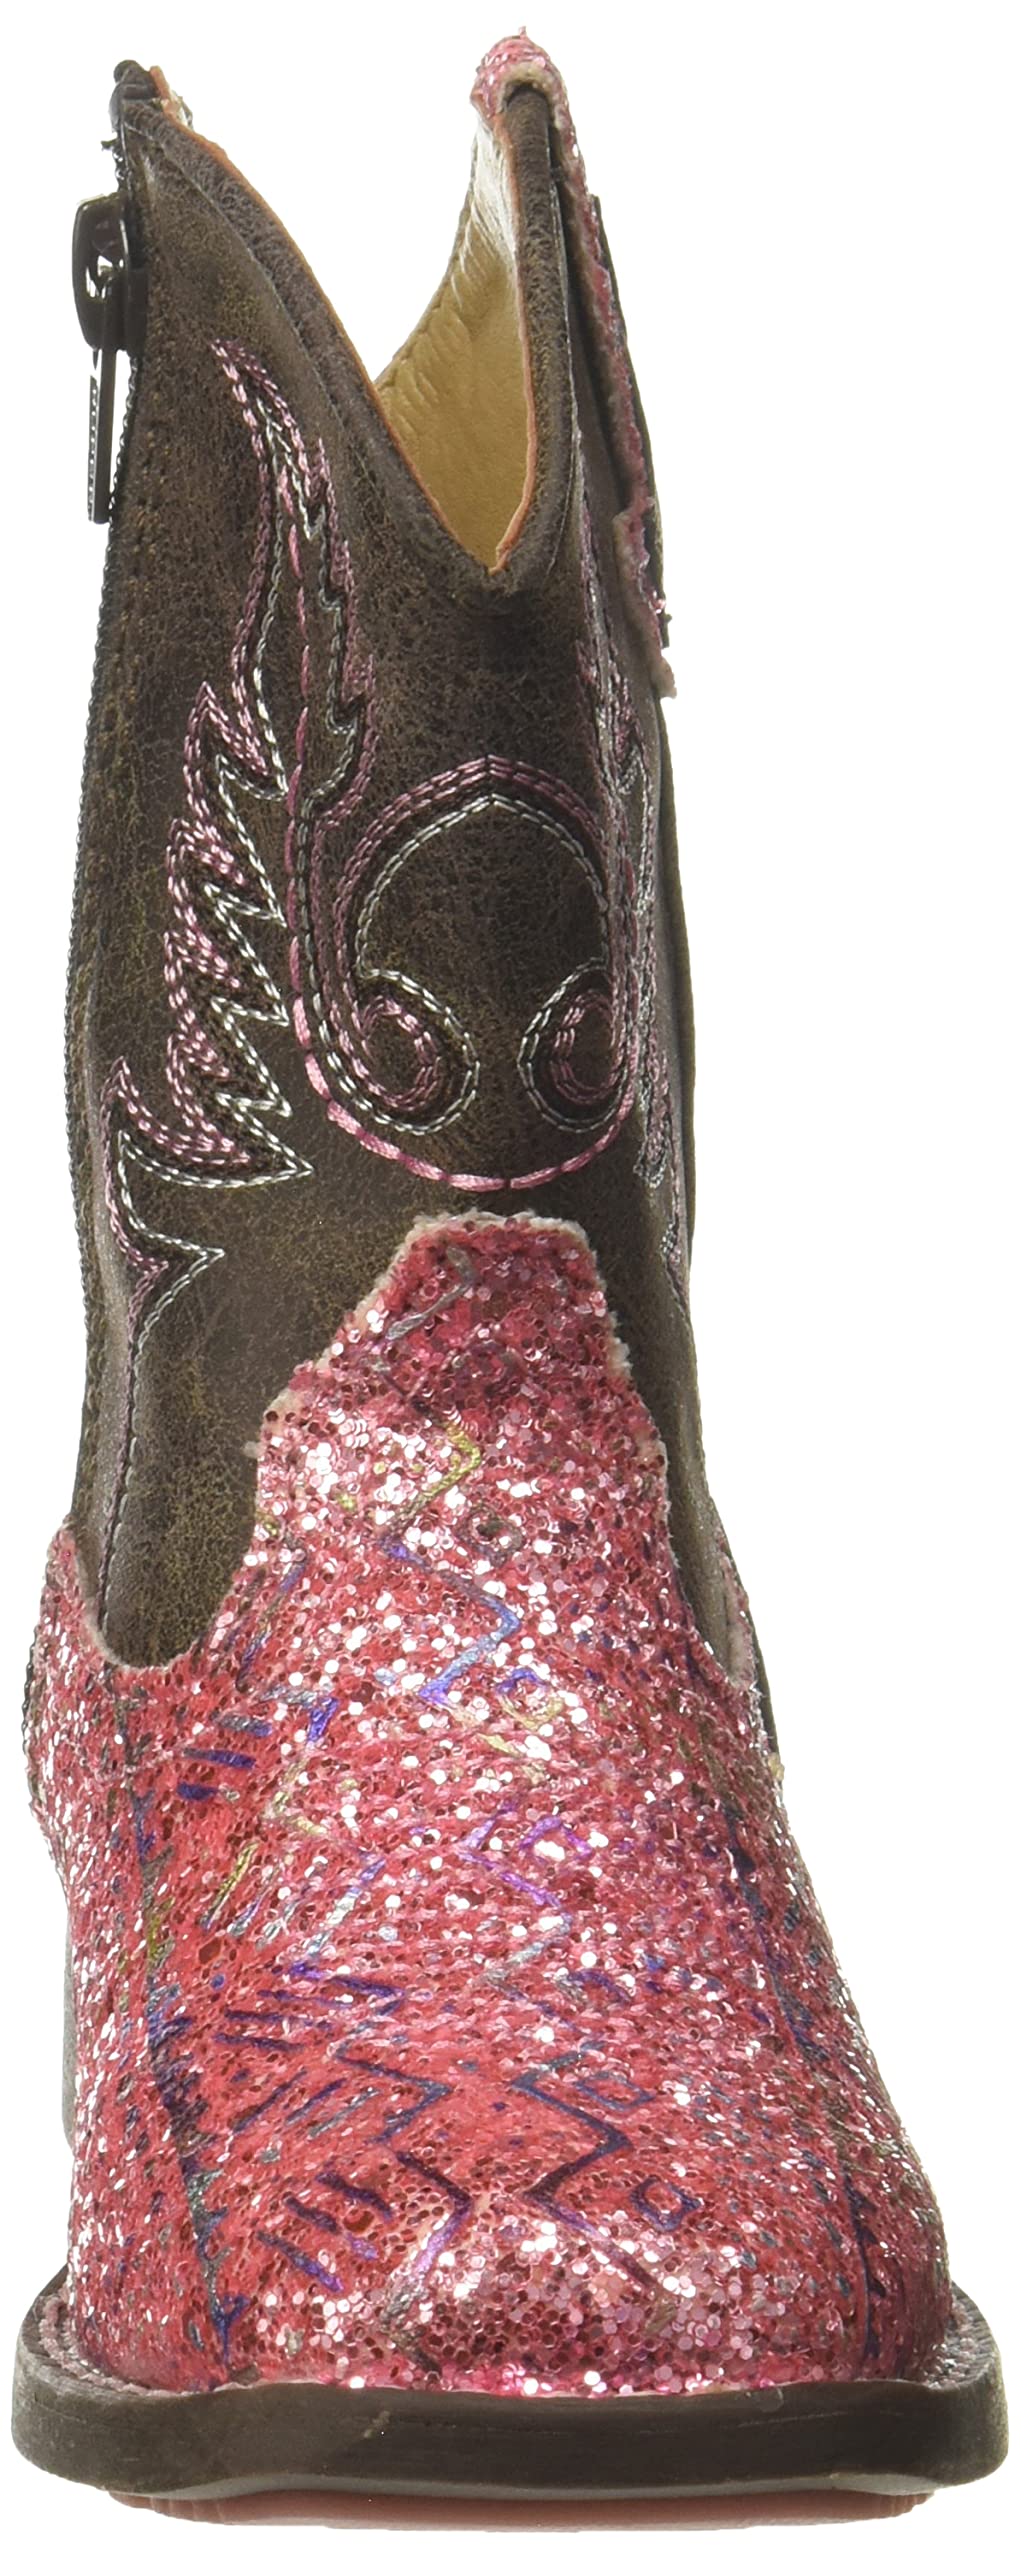 ROPER Unisex-Child Glitter Square Toe Cowgirl Boot Western